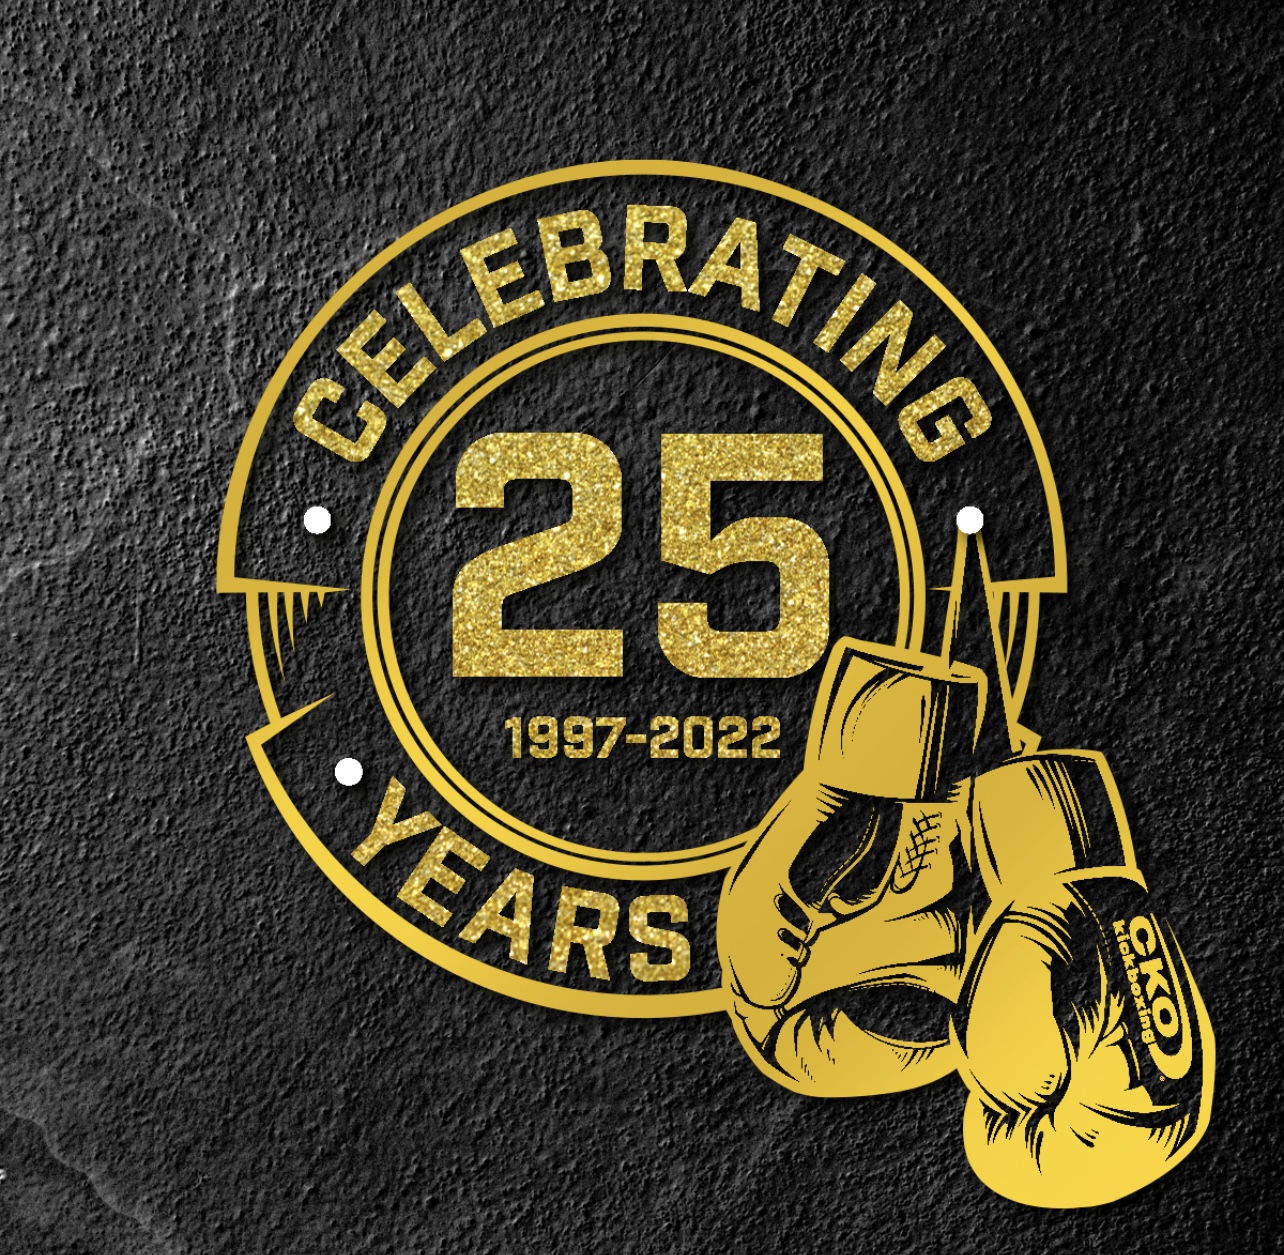 CKO Kickboxing Celebrates 25 Years of Achievement 1